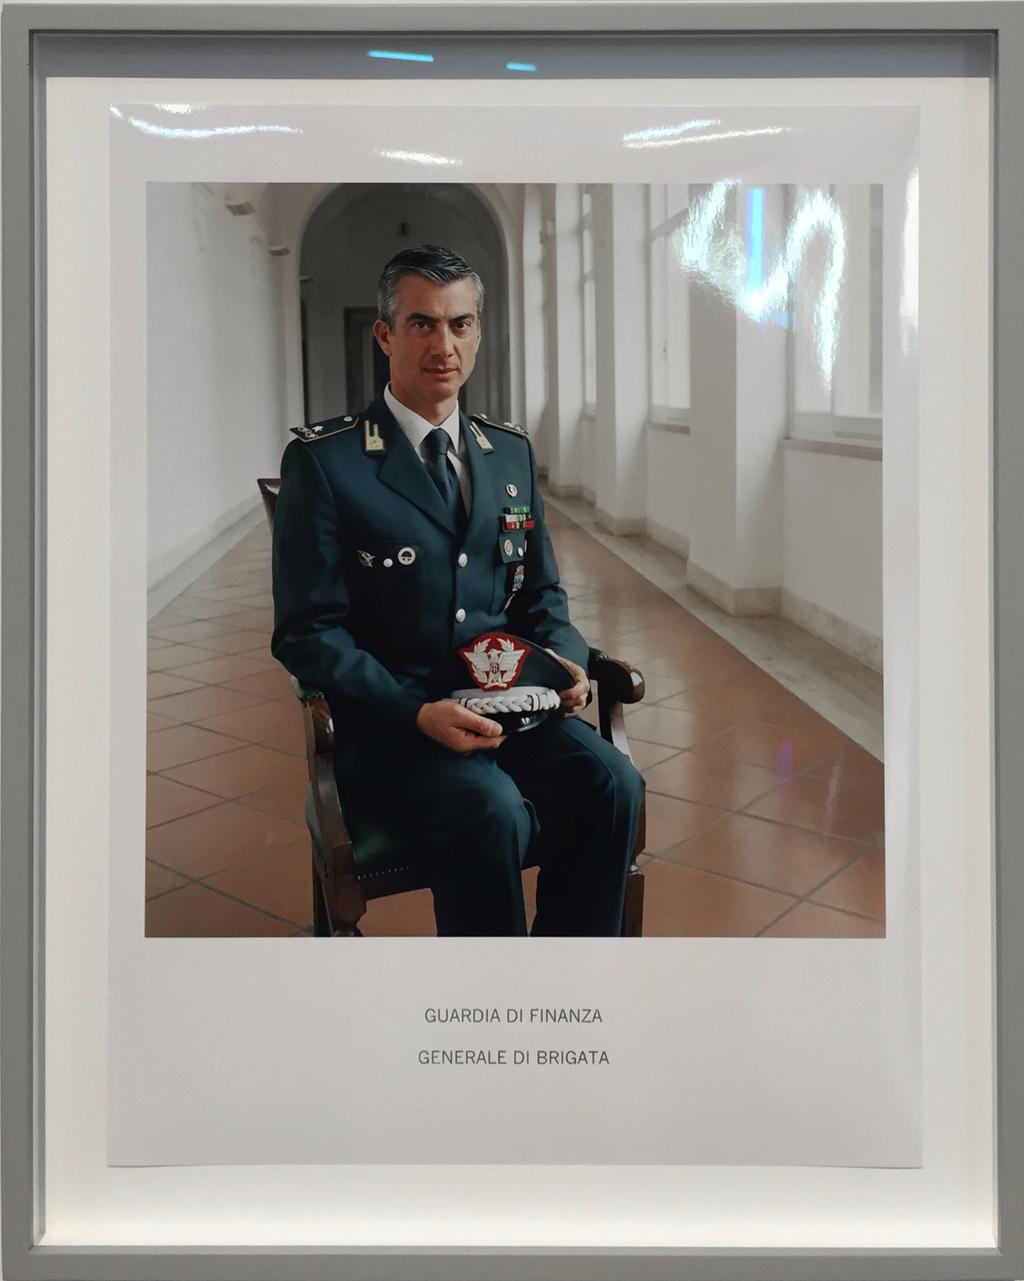 Timm Rautert,»Guardia di Finanza«, Generale di Brigata, from the series:»weltraum«, Rome 2014/2015, 28,1 x 27,6 cm, framed 46 x 37 cm, courtesy